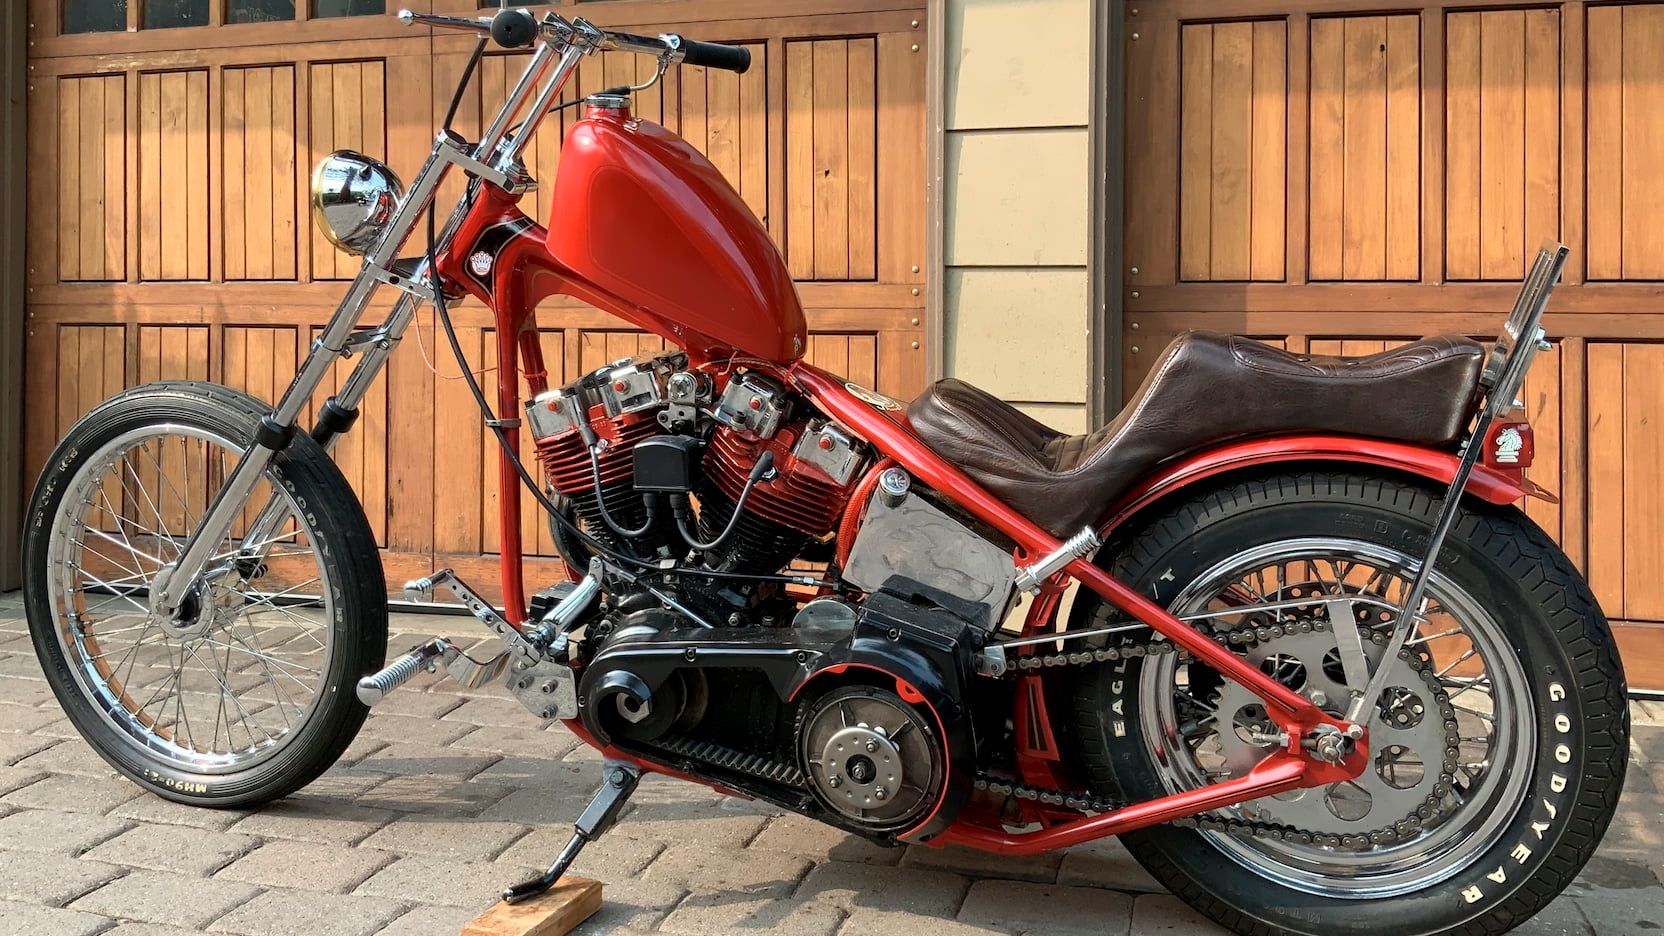 Harley Chopper personalizada roja.